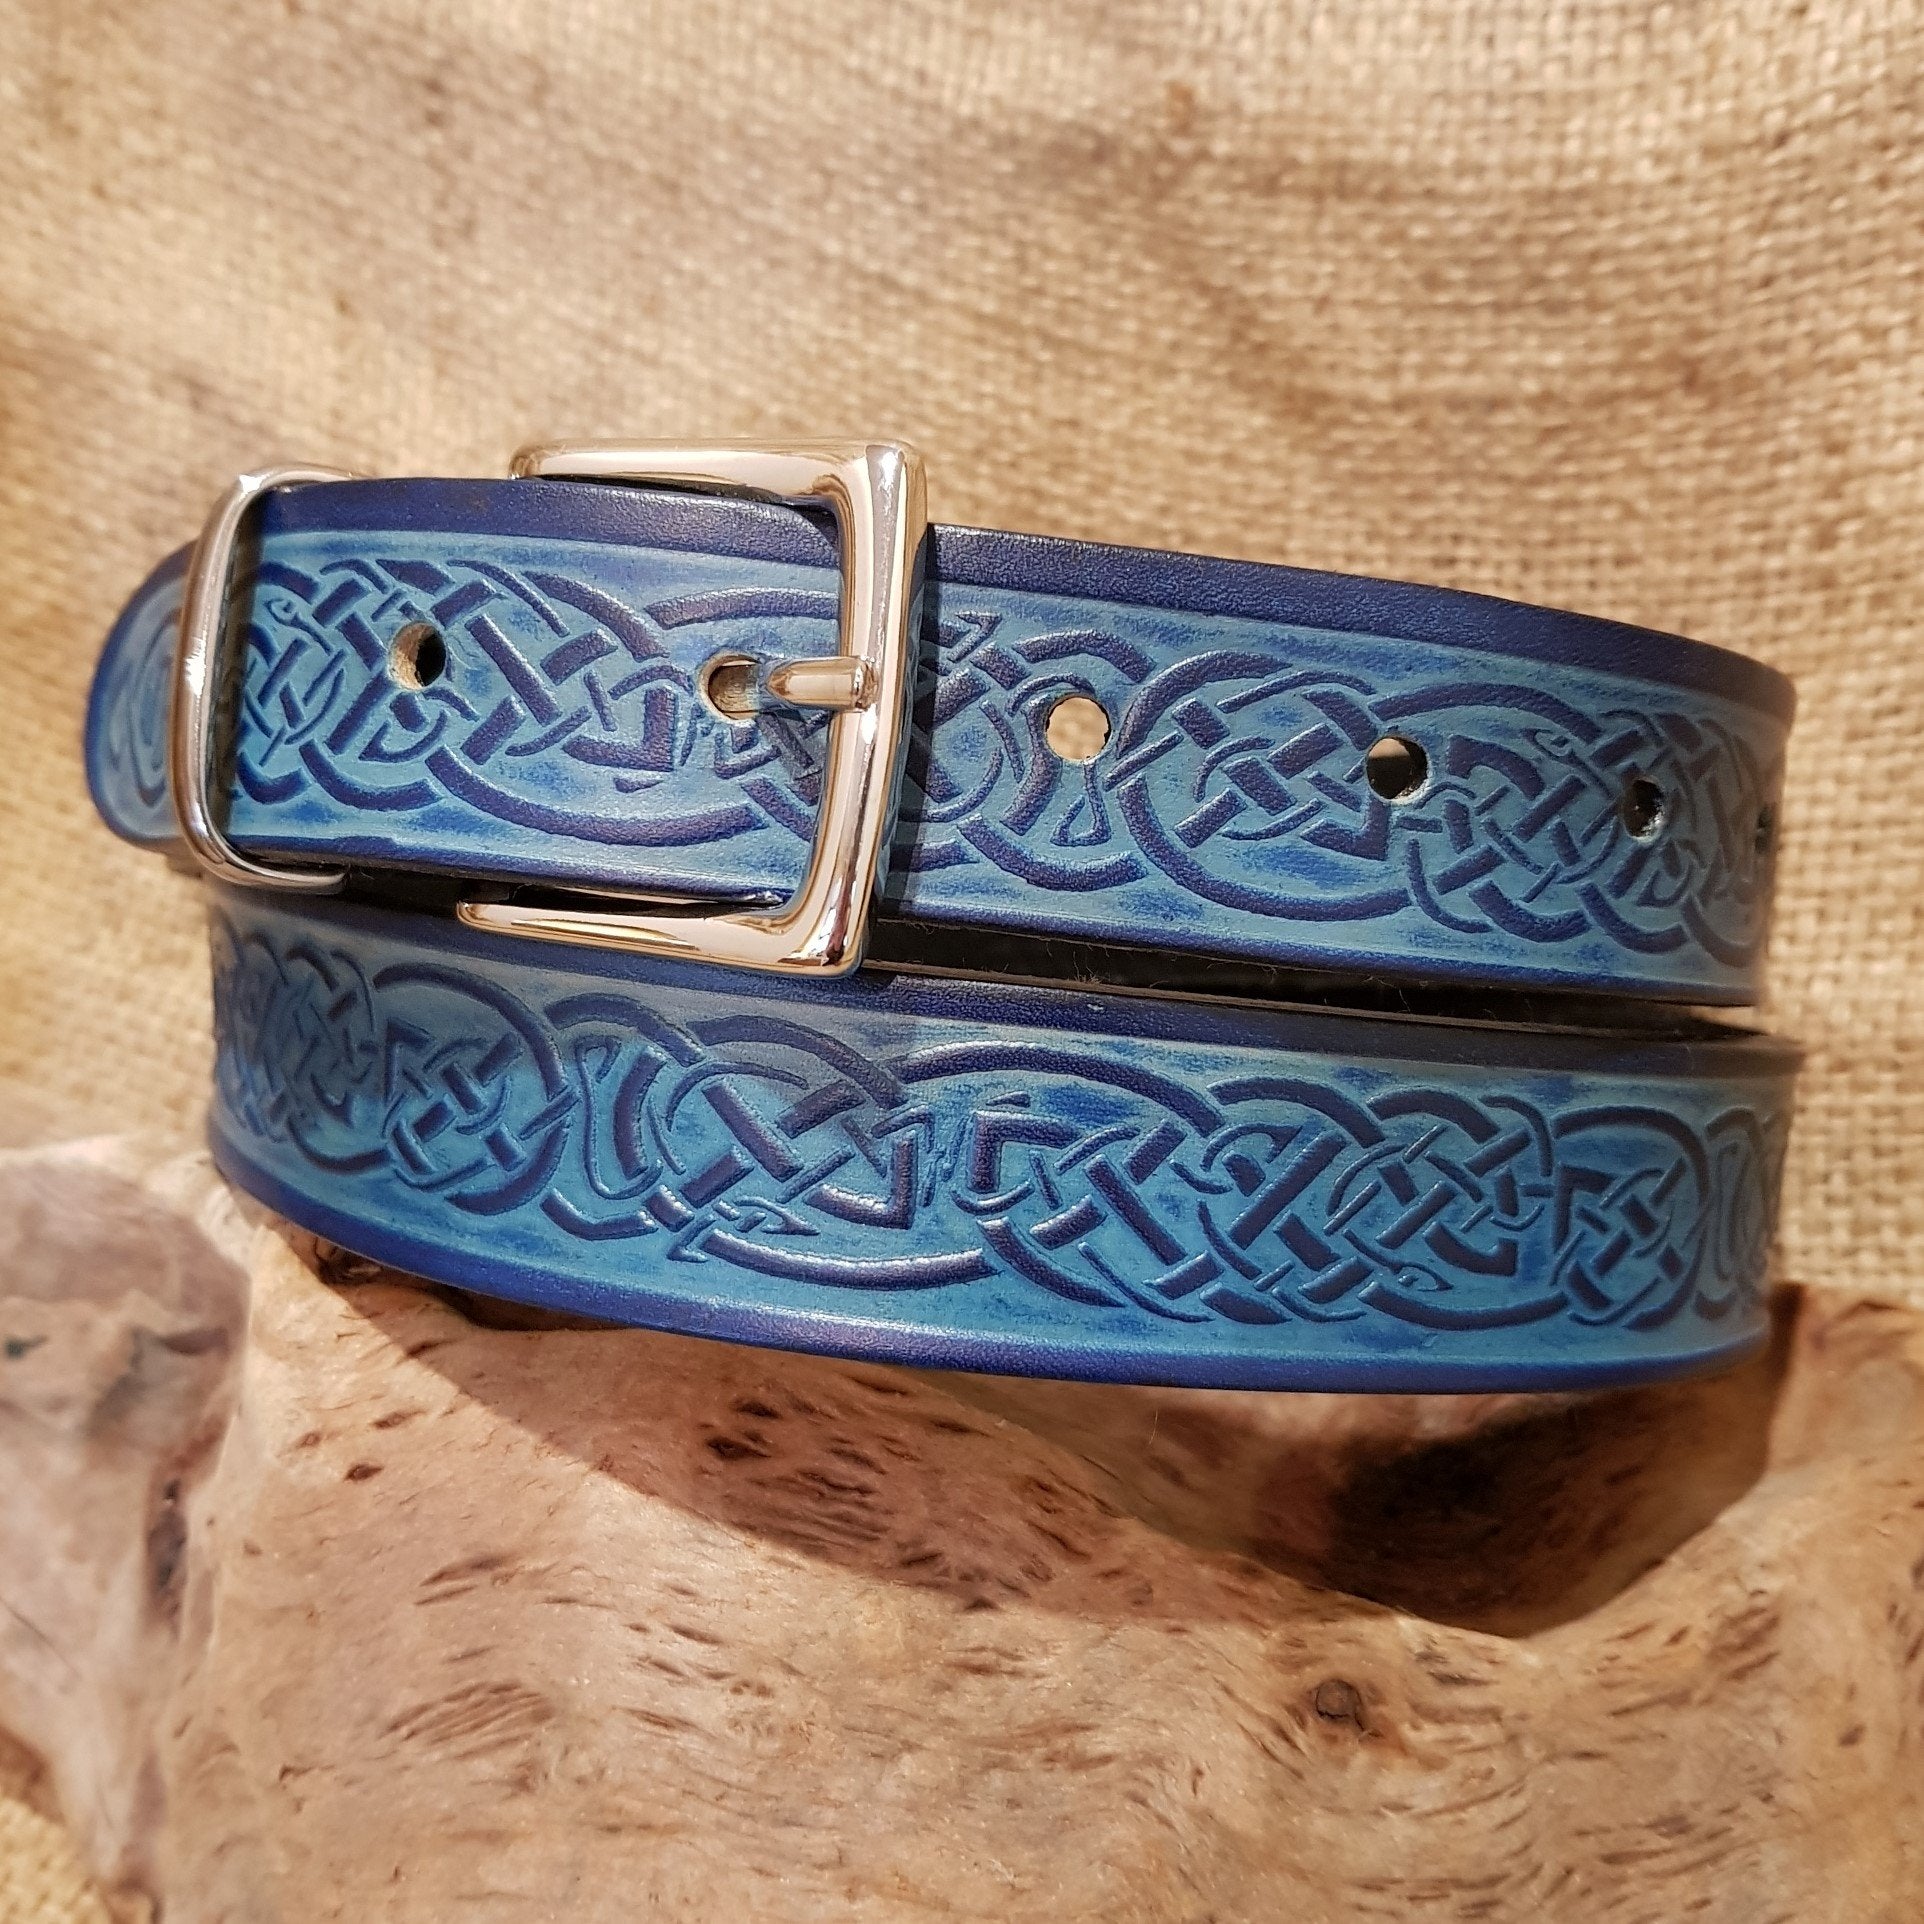 Narrow blue leather celtic belt